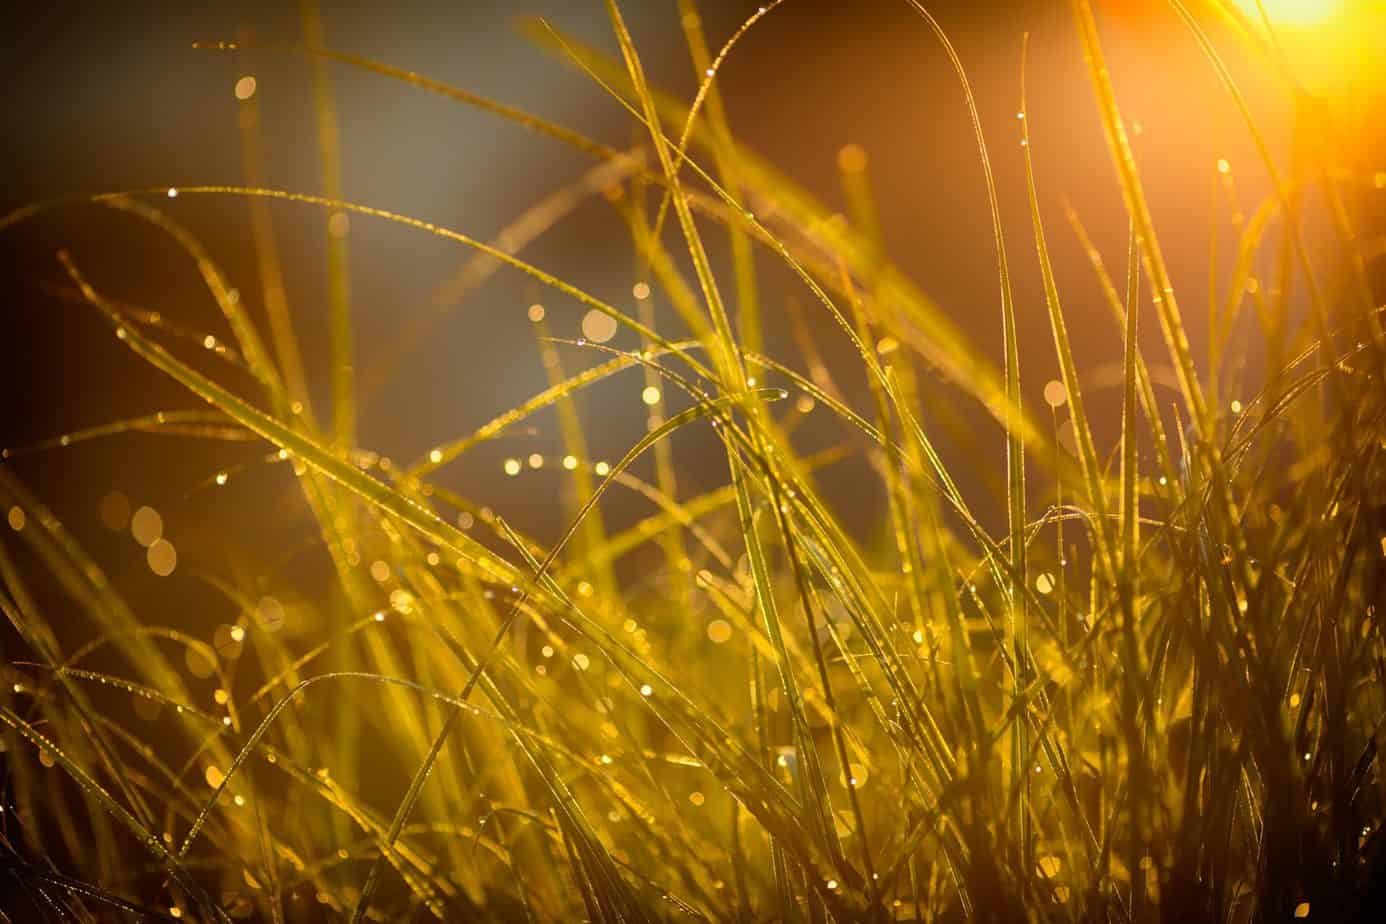 Sun rising through dew-covered grass.